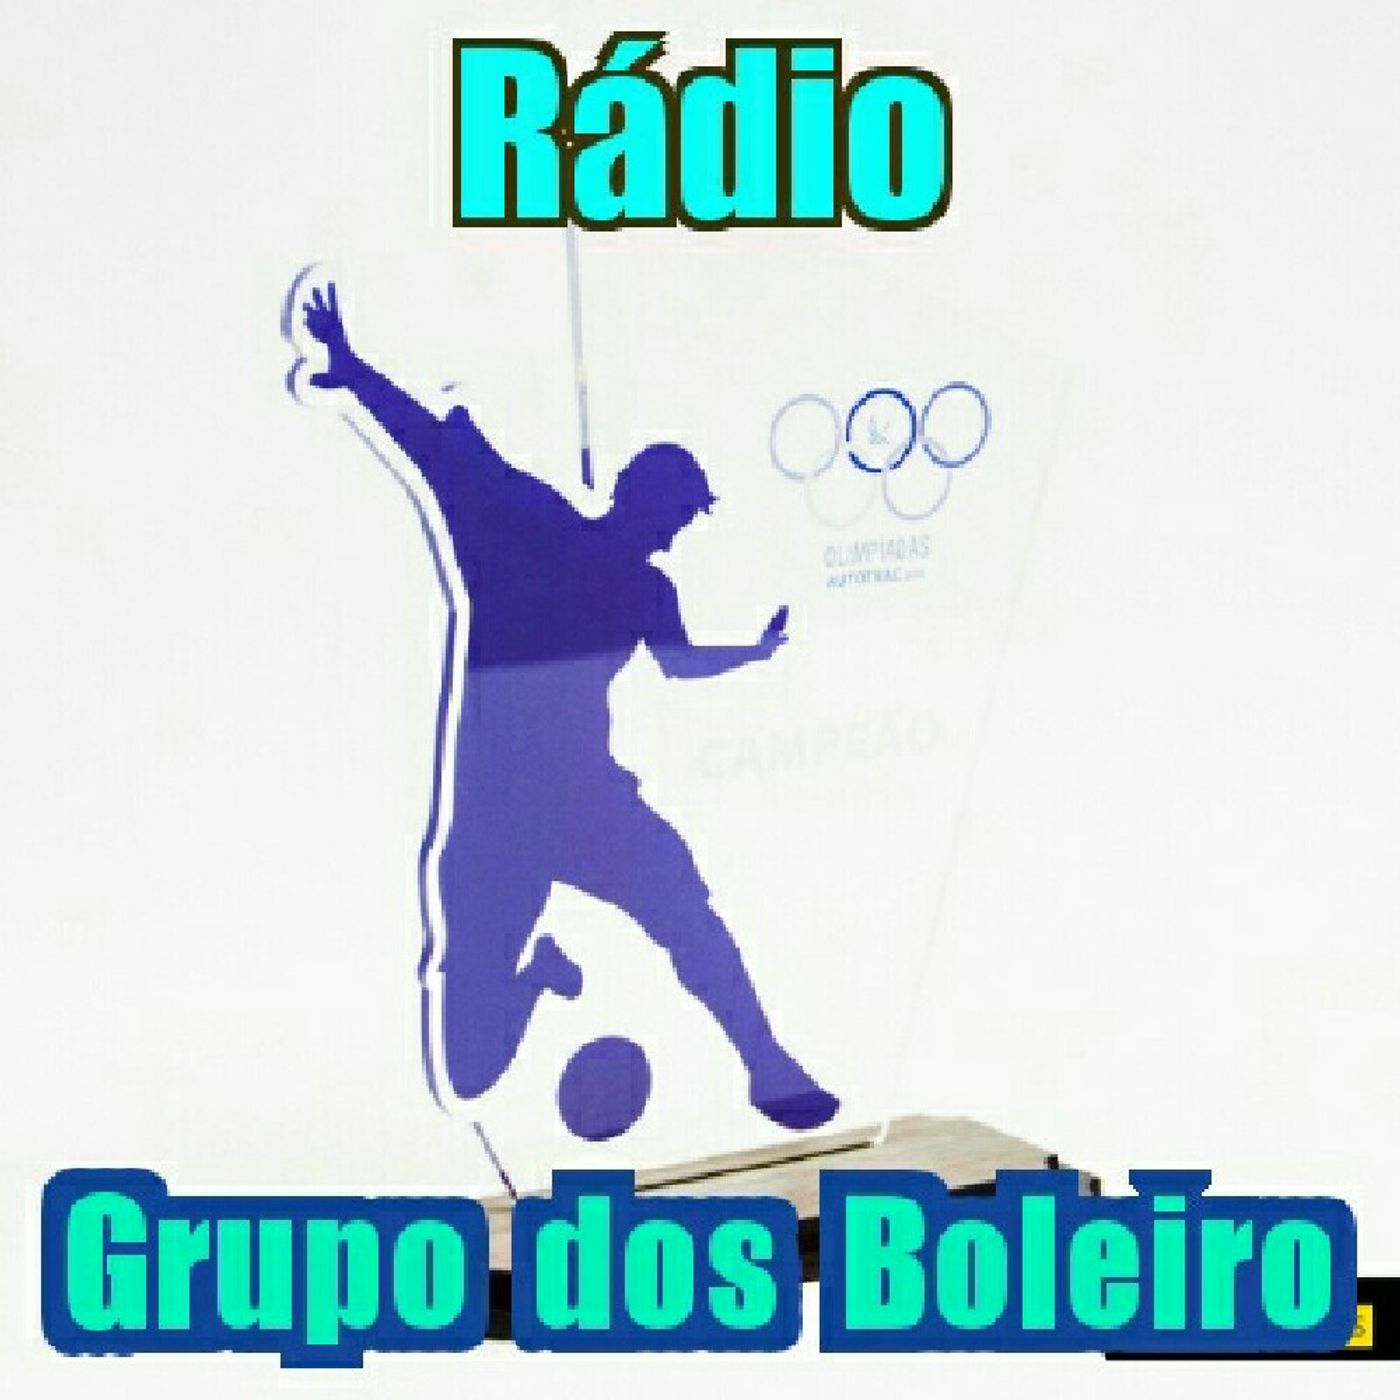 Rádio Grupo dos Boleiro